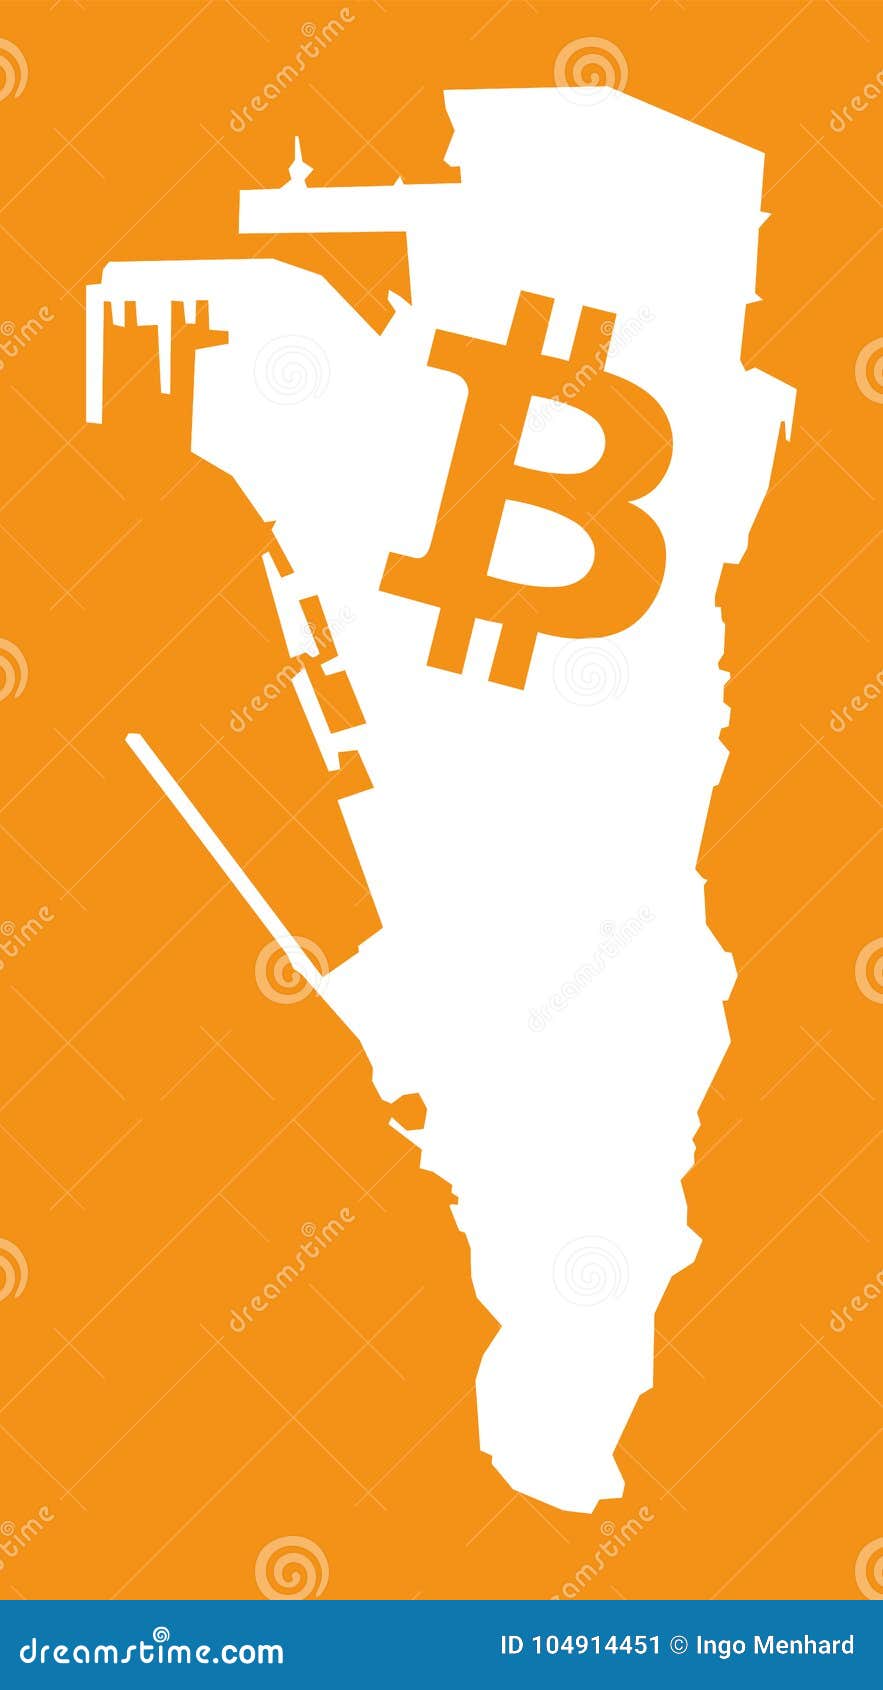 gibilterra bitcoin market making in crypto